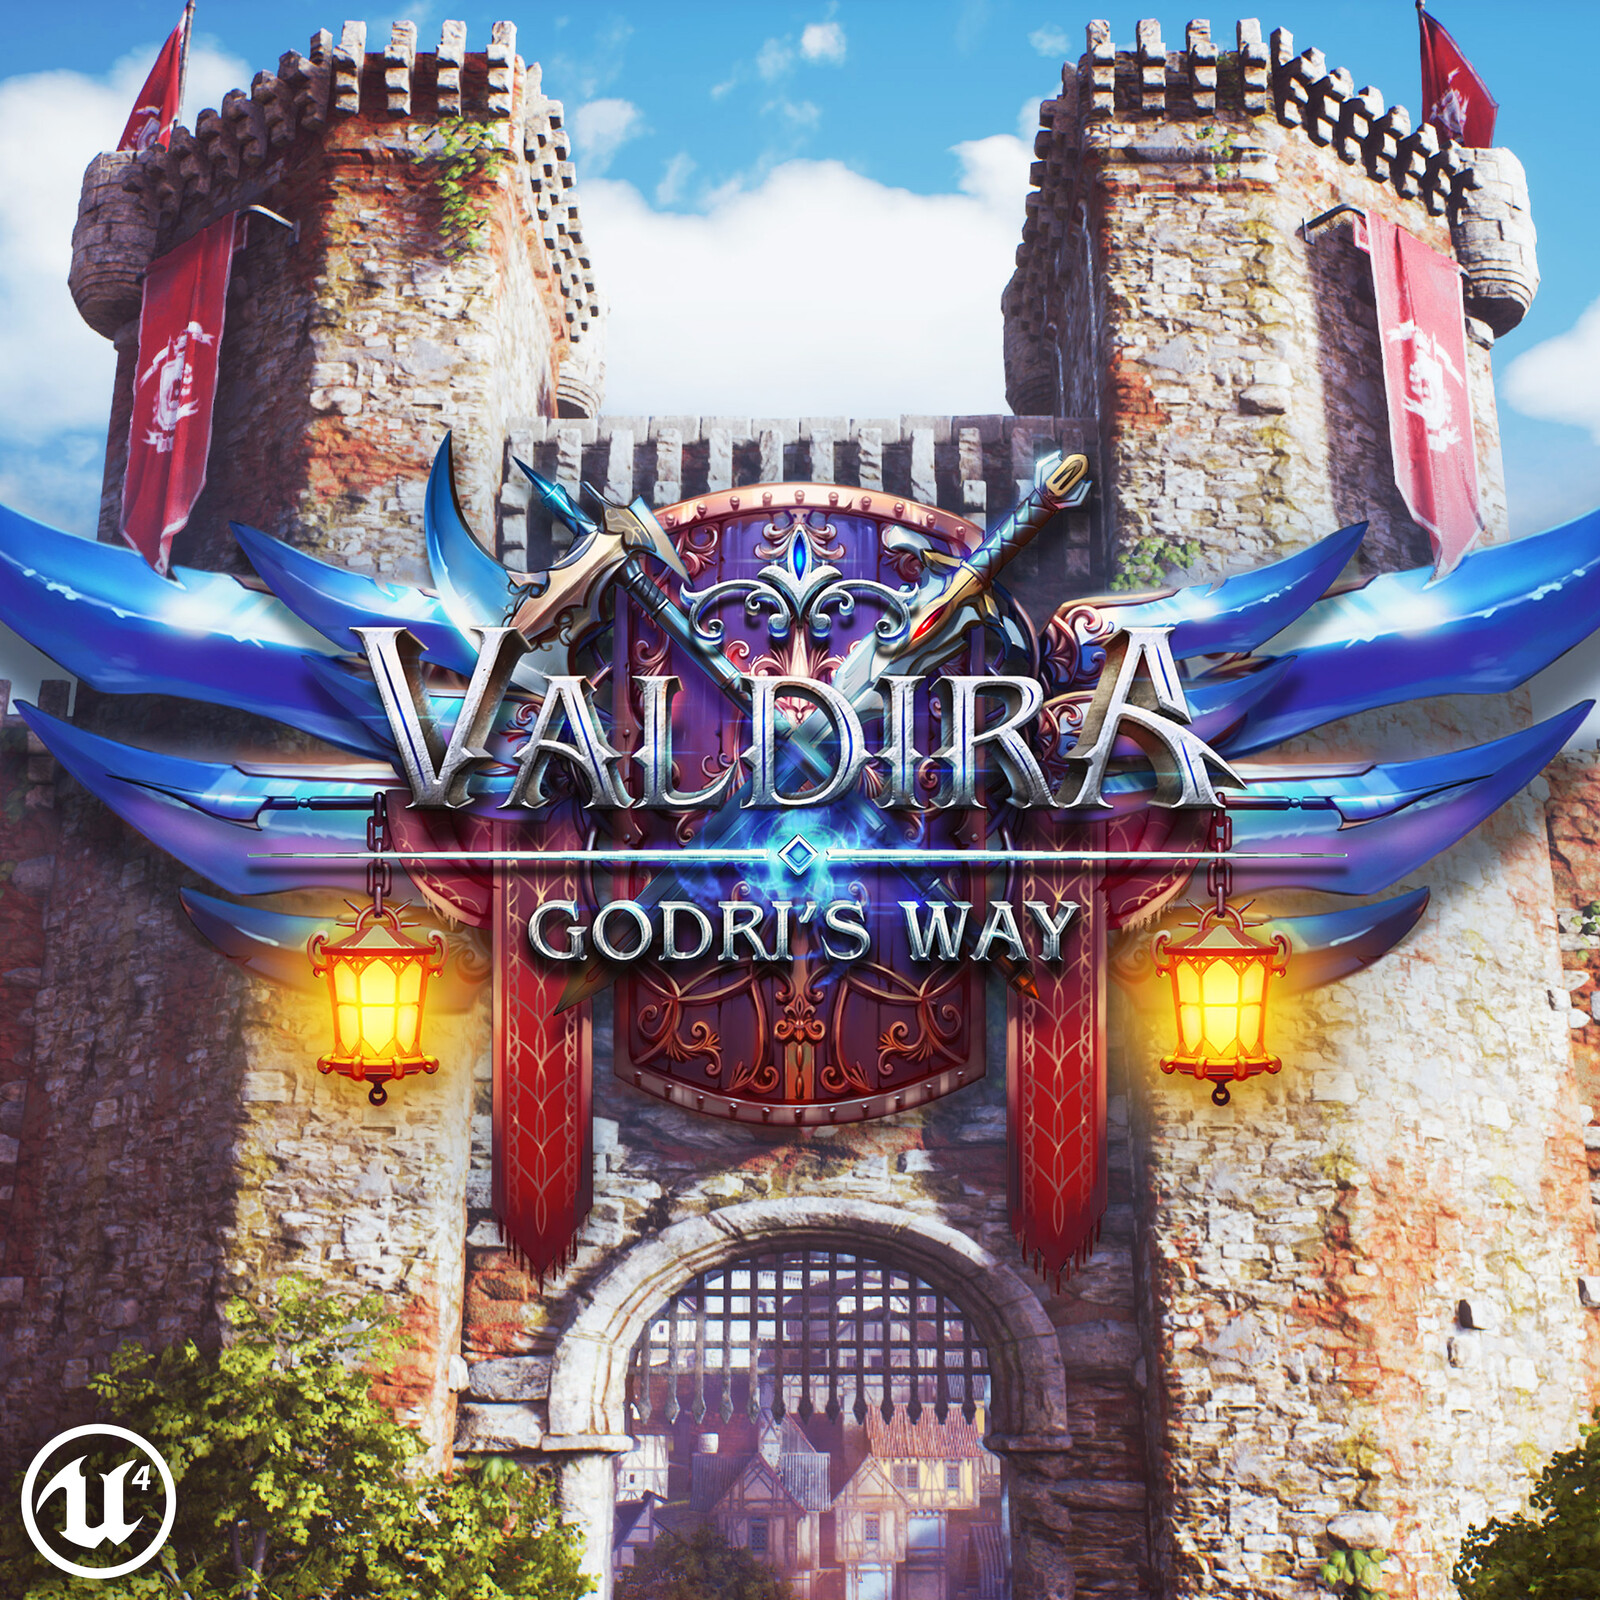 Valdira: Godri's Way | Second Teaser Trailer